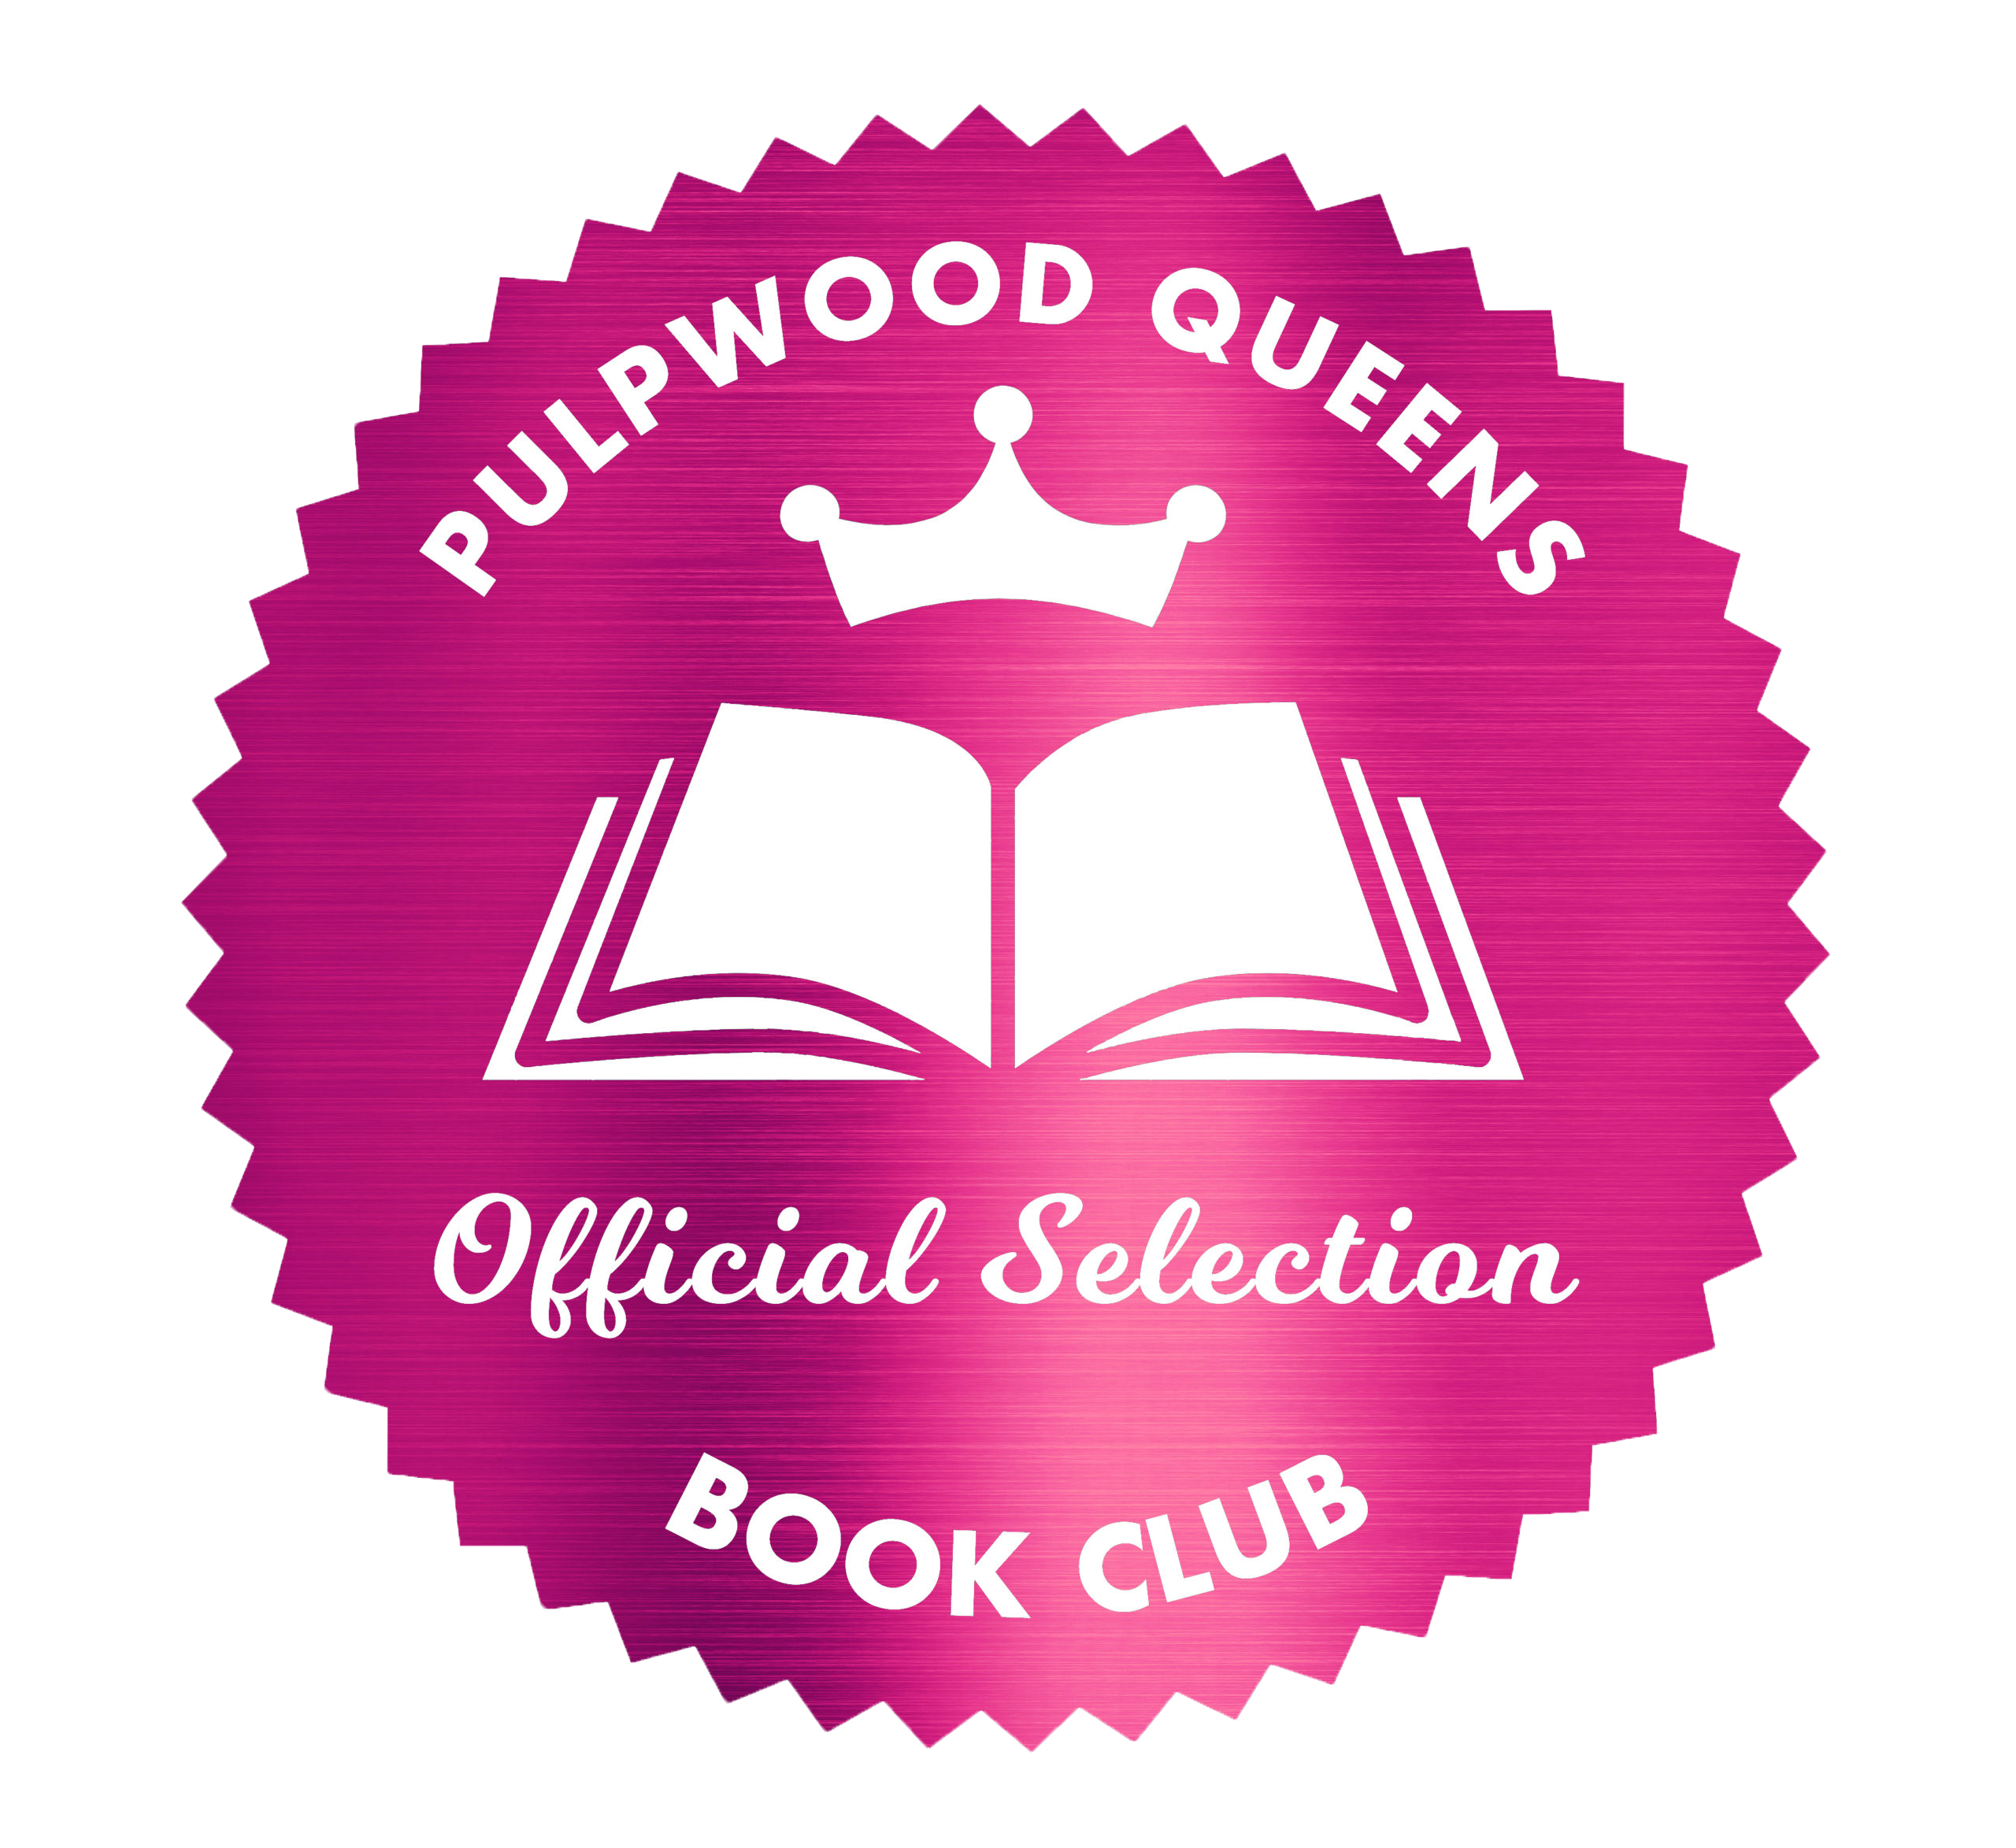 Pulpwood Queens Book Club